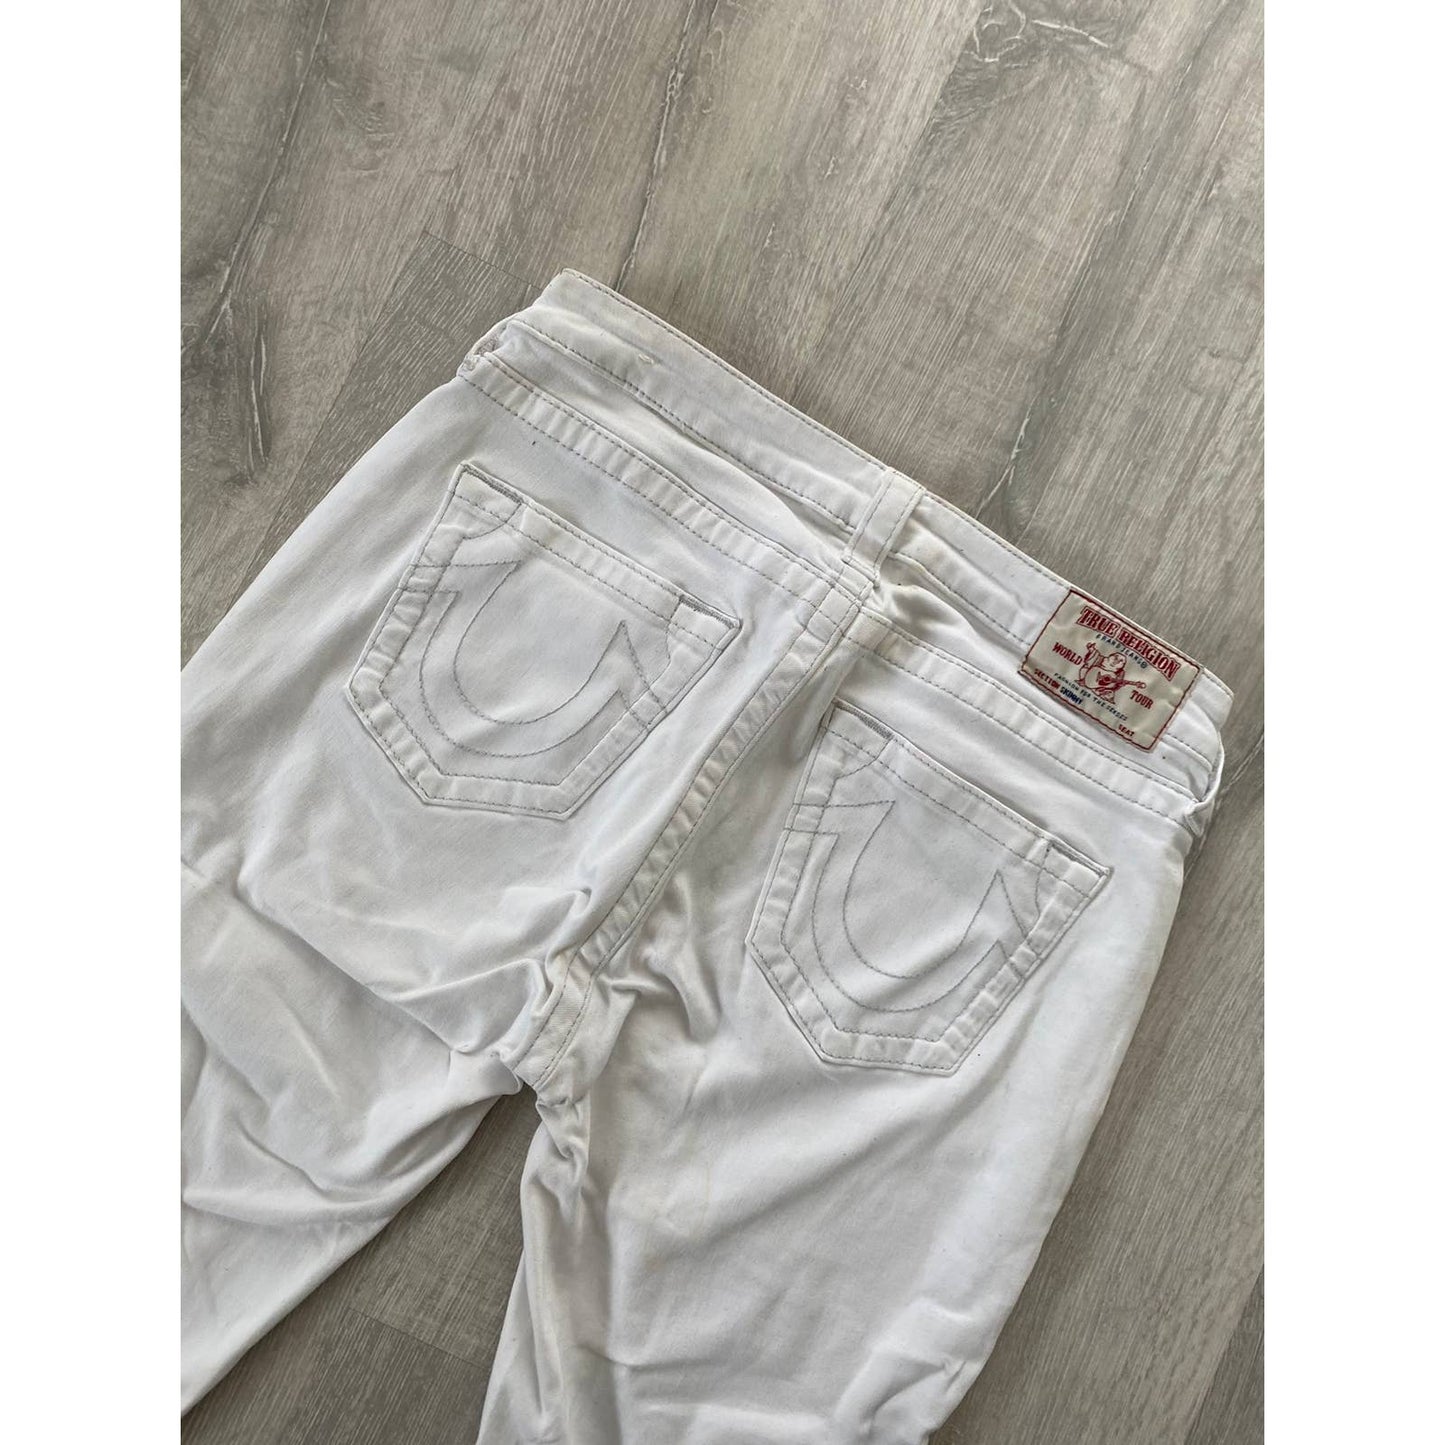 True Religion vintage white jeans denim pants Y2K